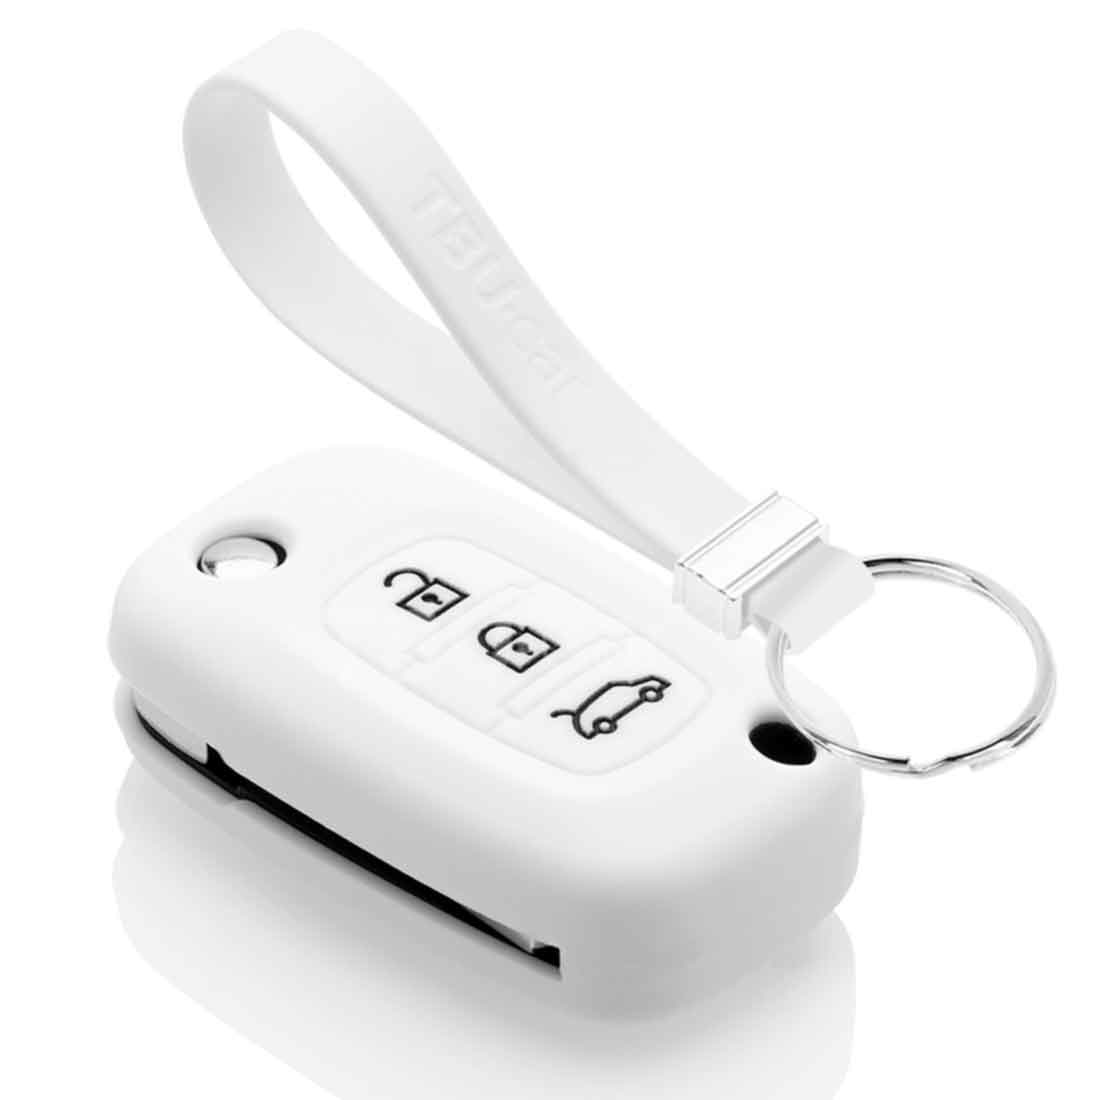 TBU car TBU car Autoschlüssel Hülle kompatibel mit Smart 3 Tasten - Schutzhülle aus Silikon - Auto Schlüsselhülle Cover in Weiß